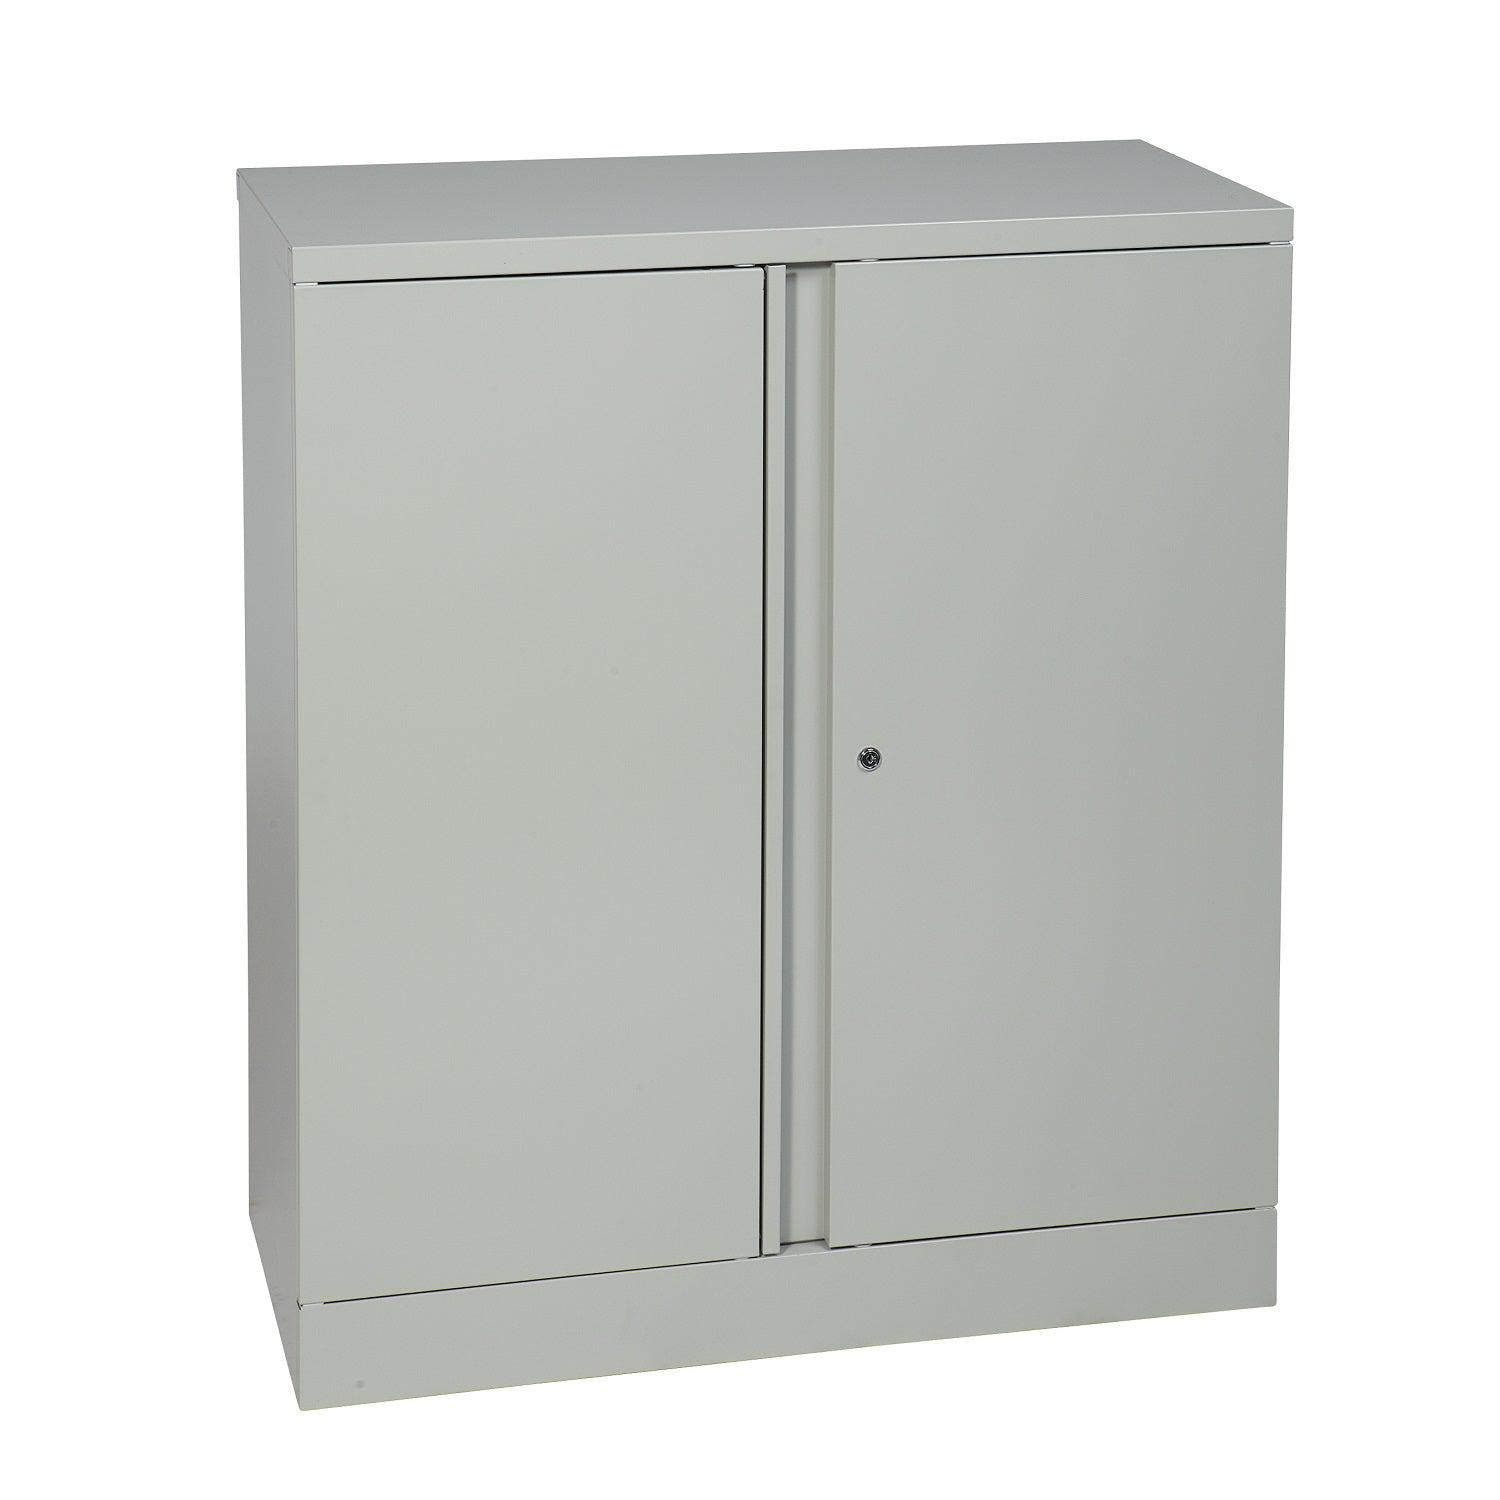 Heavy-Duty Steel Storage Cabinet with 1 Adjustable Shelf, 42" H